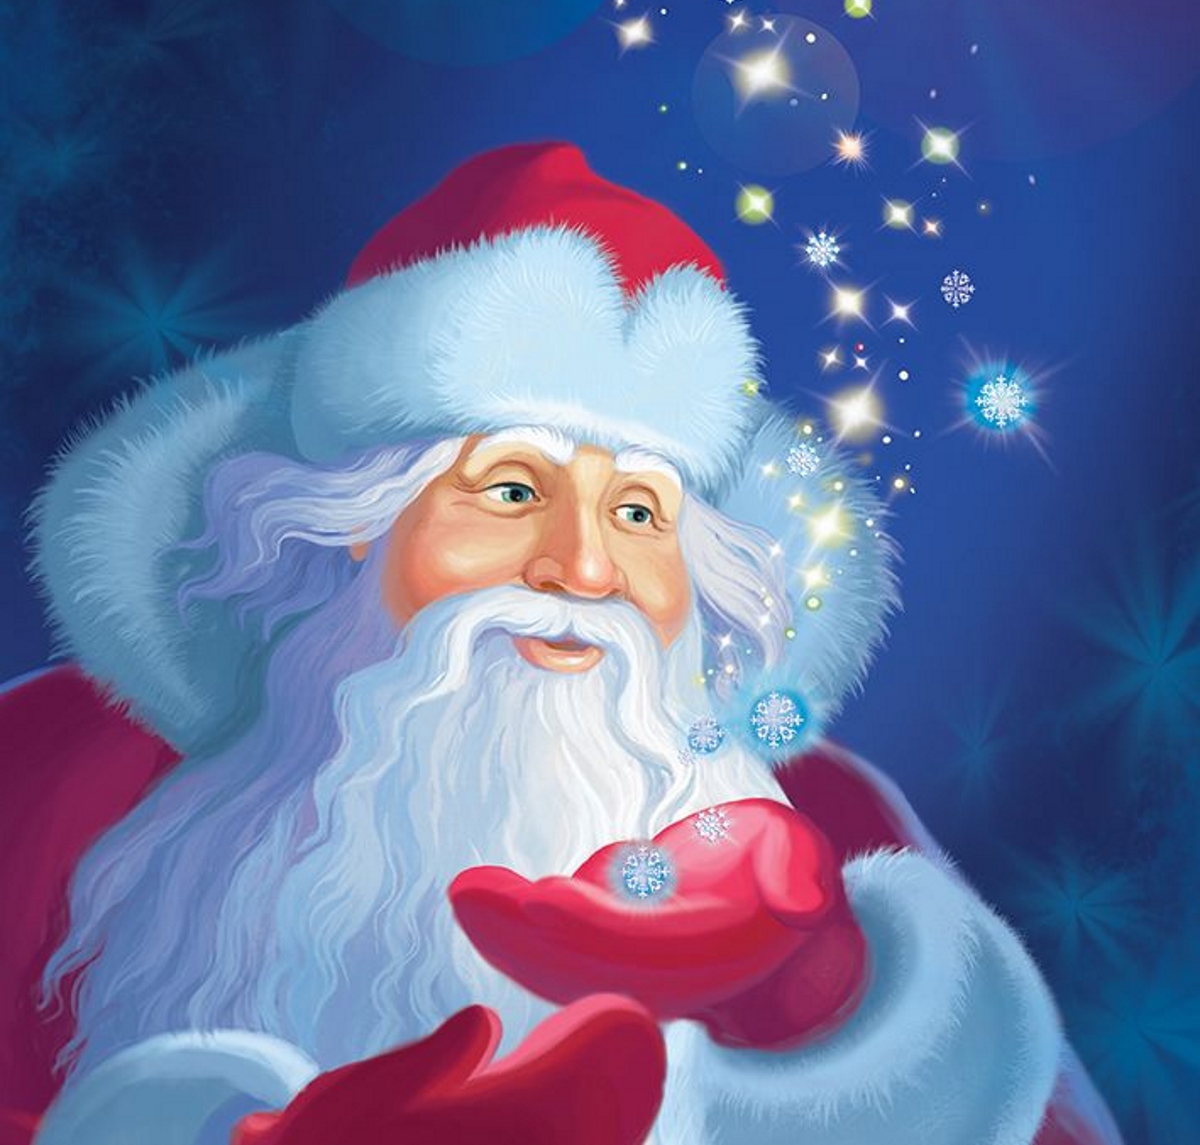 Посмотрим дед мороза. Дед Мороз. Изображение Деда Мороза. Портрет Деда Мороза. Красивый русский дед Мороз.